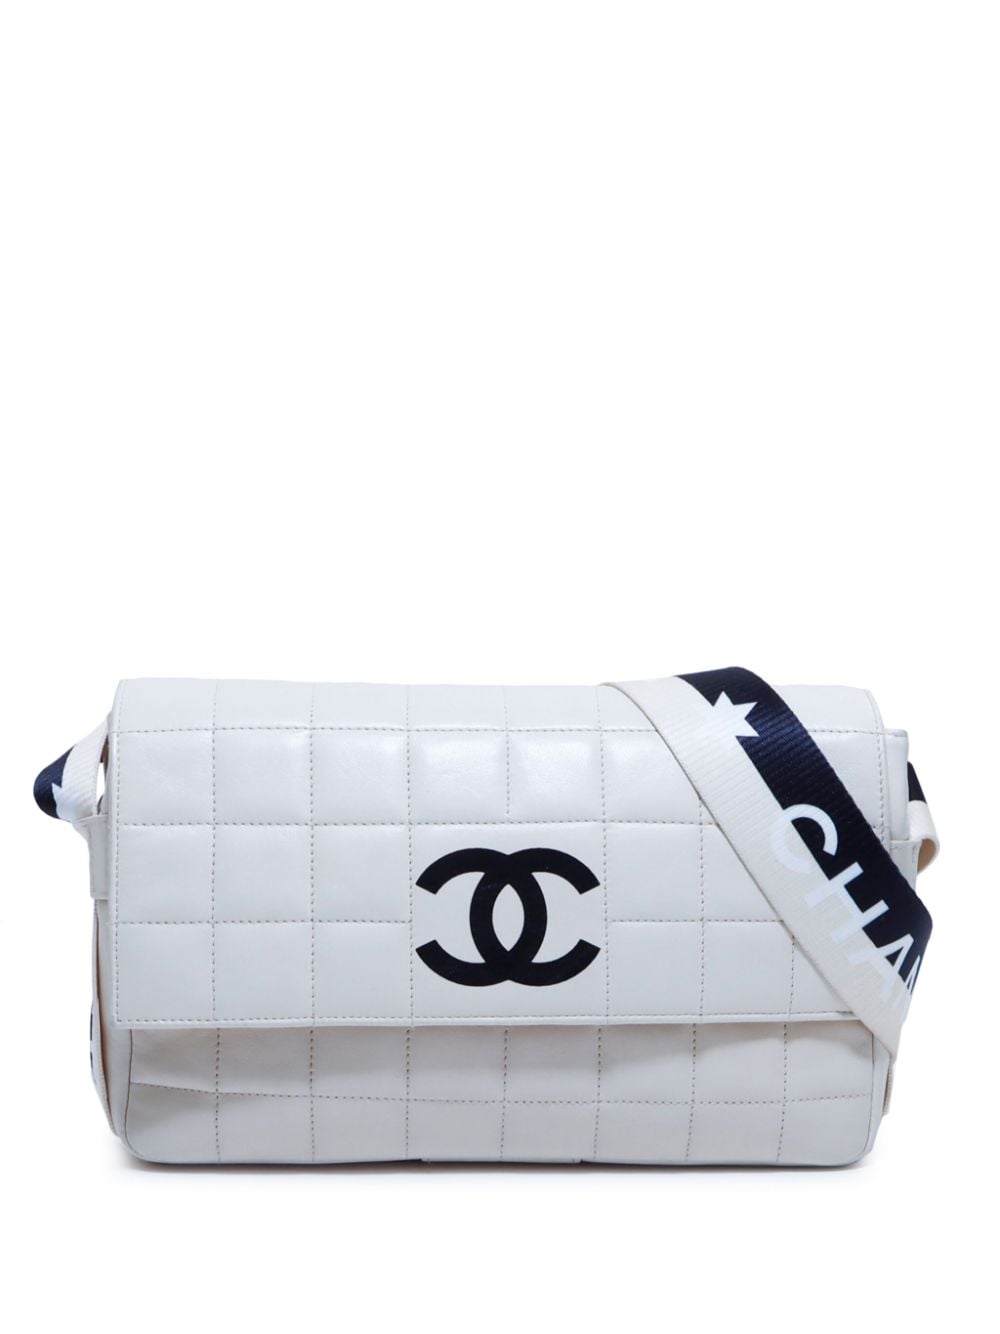 Pre-owned Chanel 2000-2002 East West Shoulder Bag In White